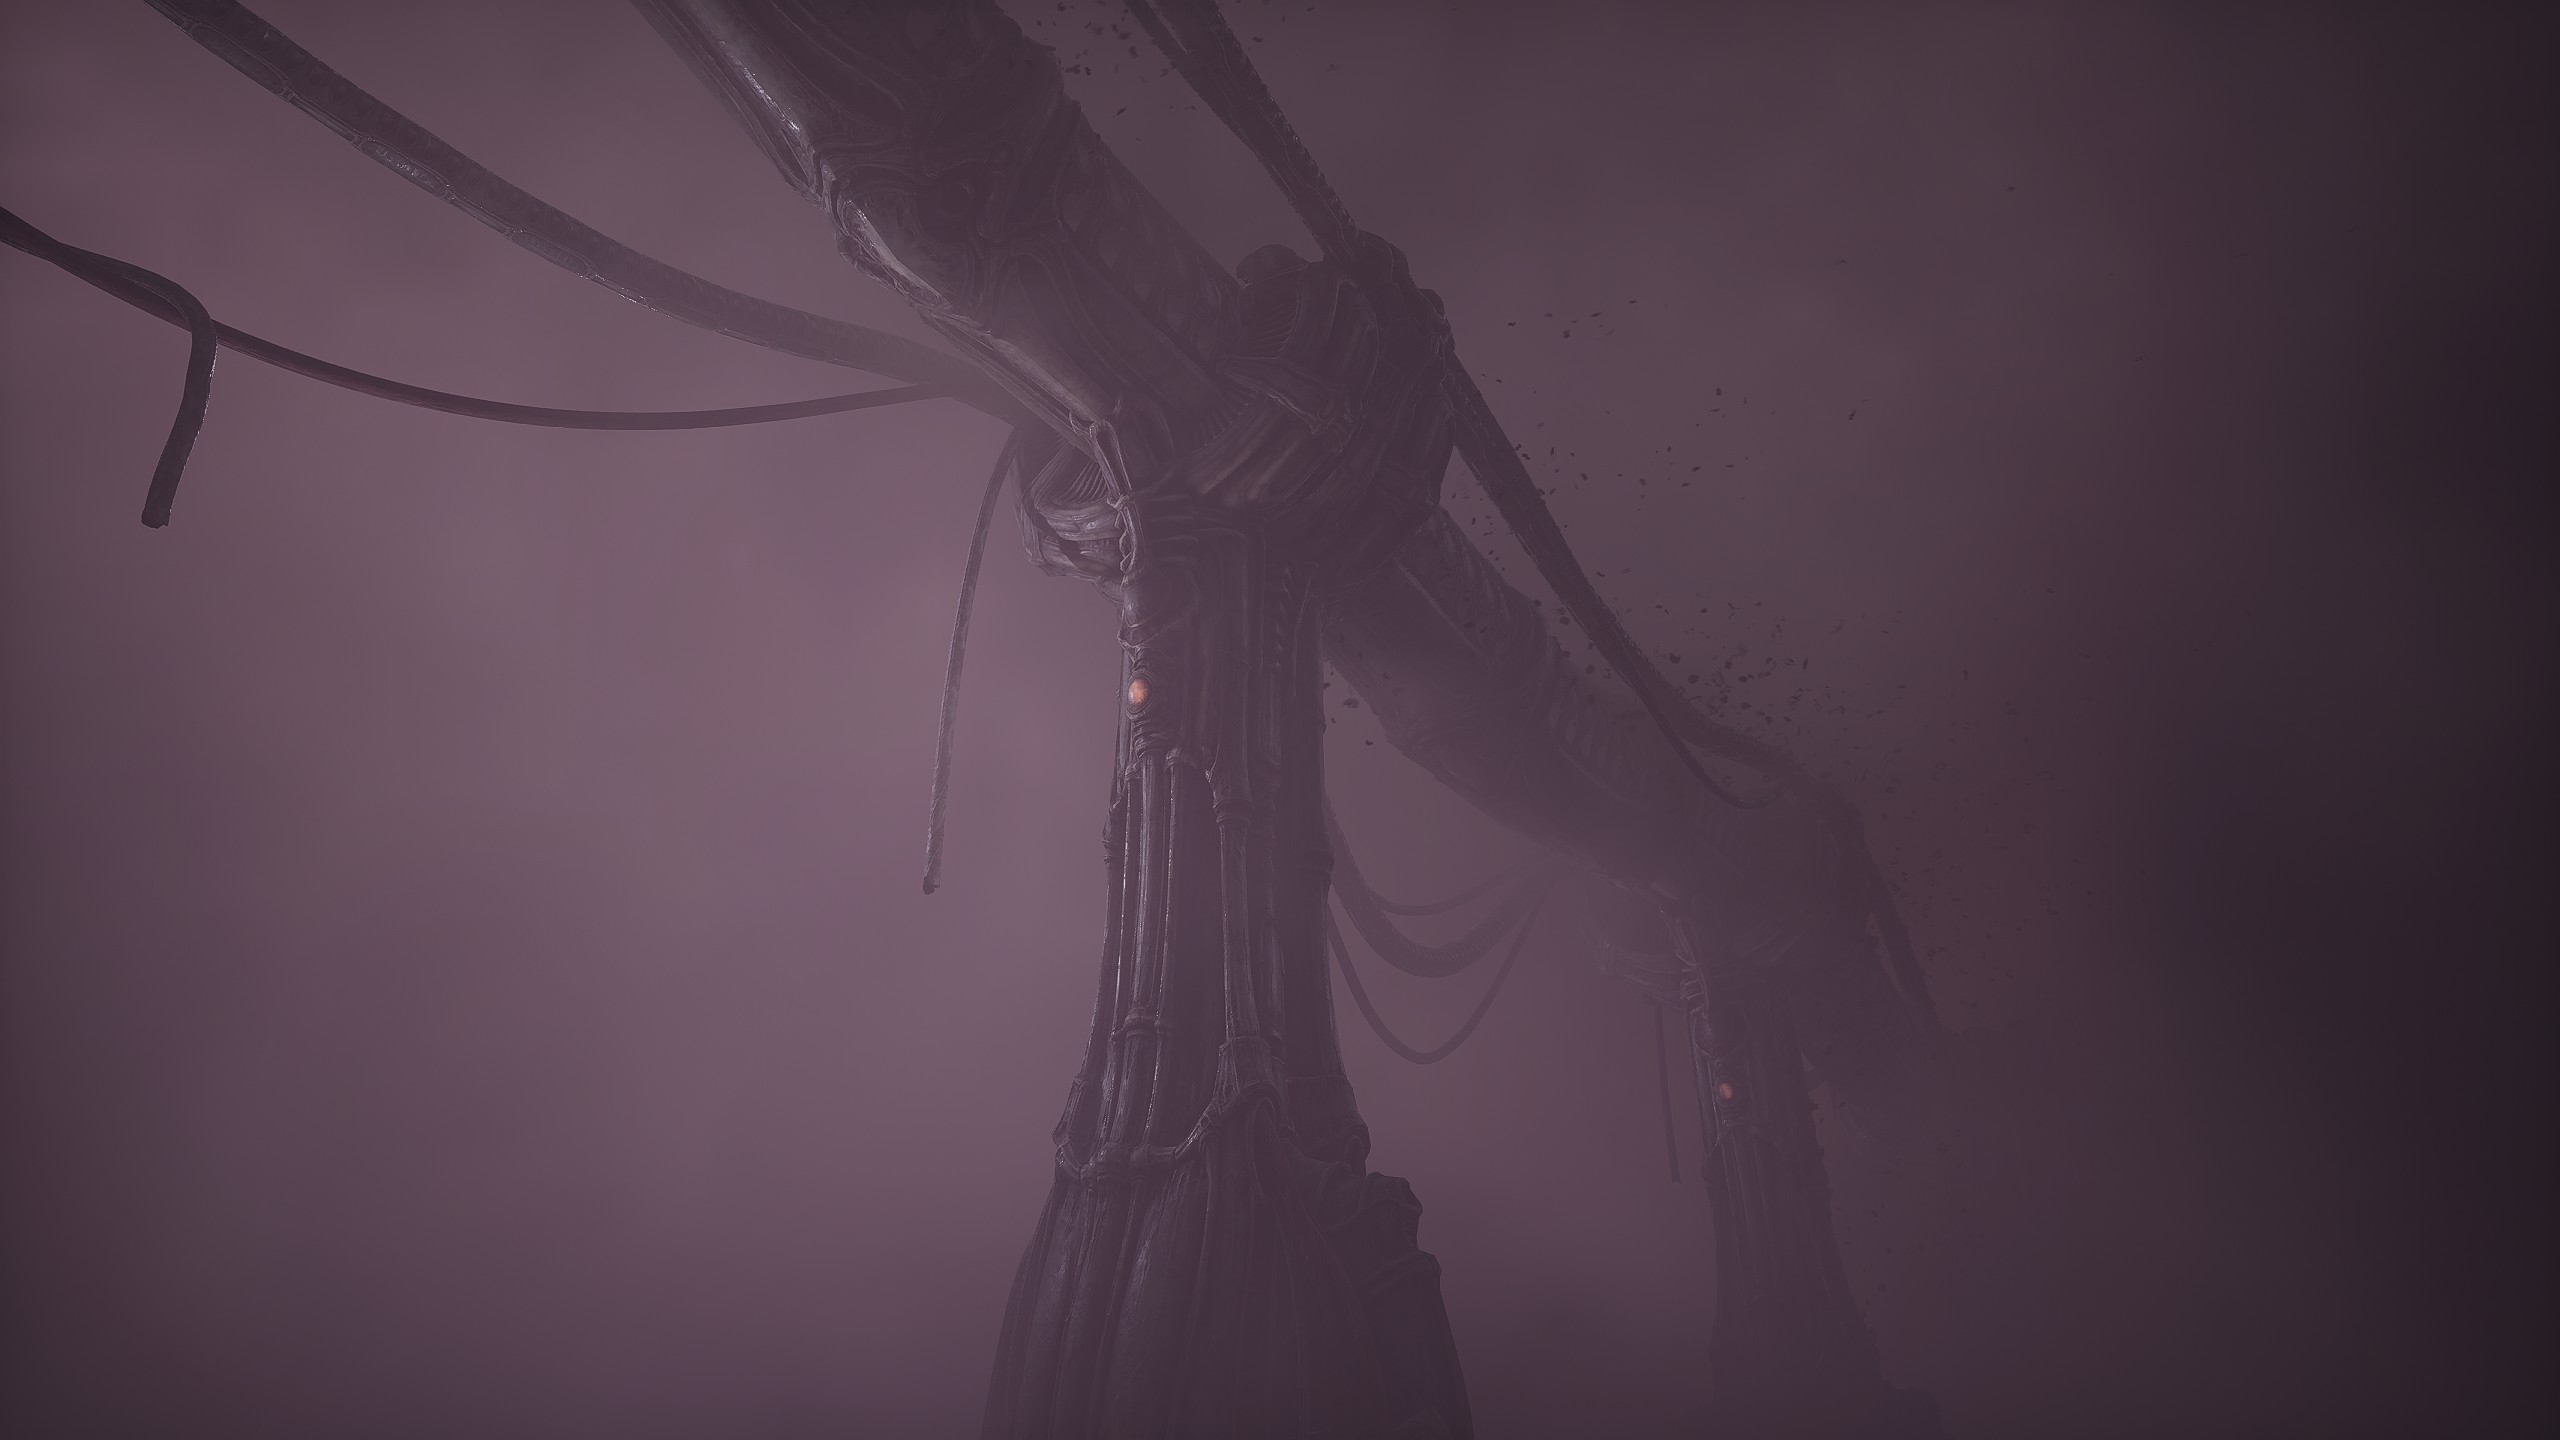 colunas insetoides sustentando algum tipo de ponte suspensa pouco visível através da neblina lilás